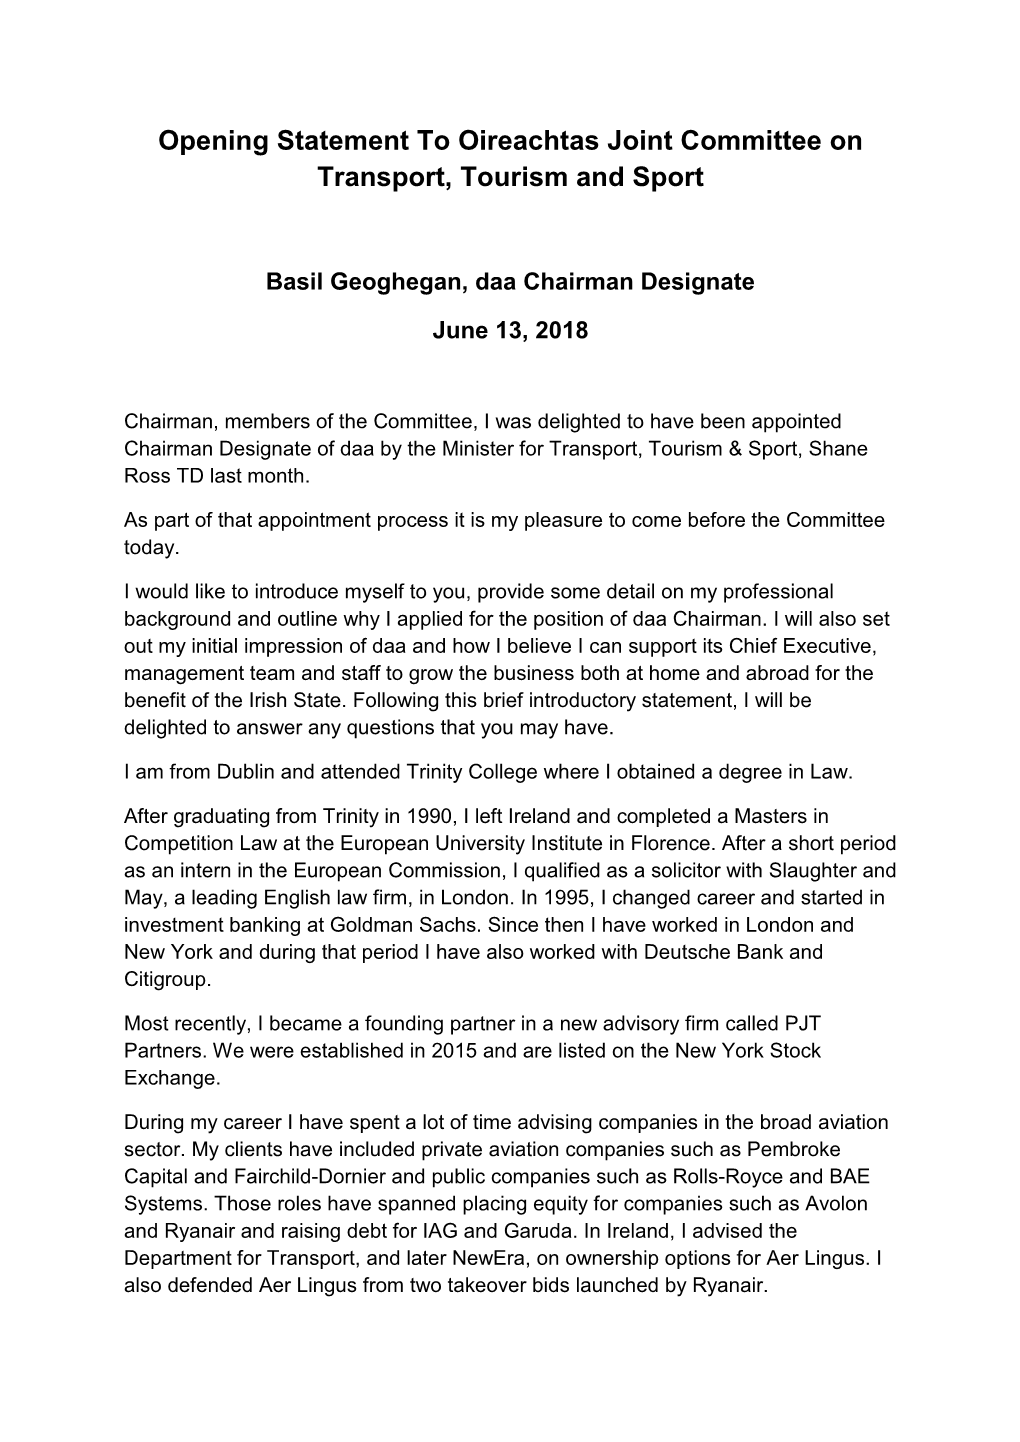 Opening Statement, Basil Geoghegan, Chairperson